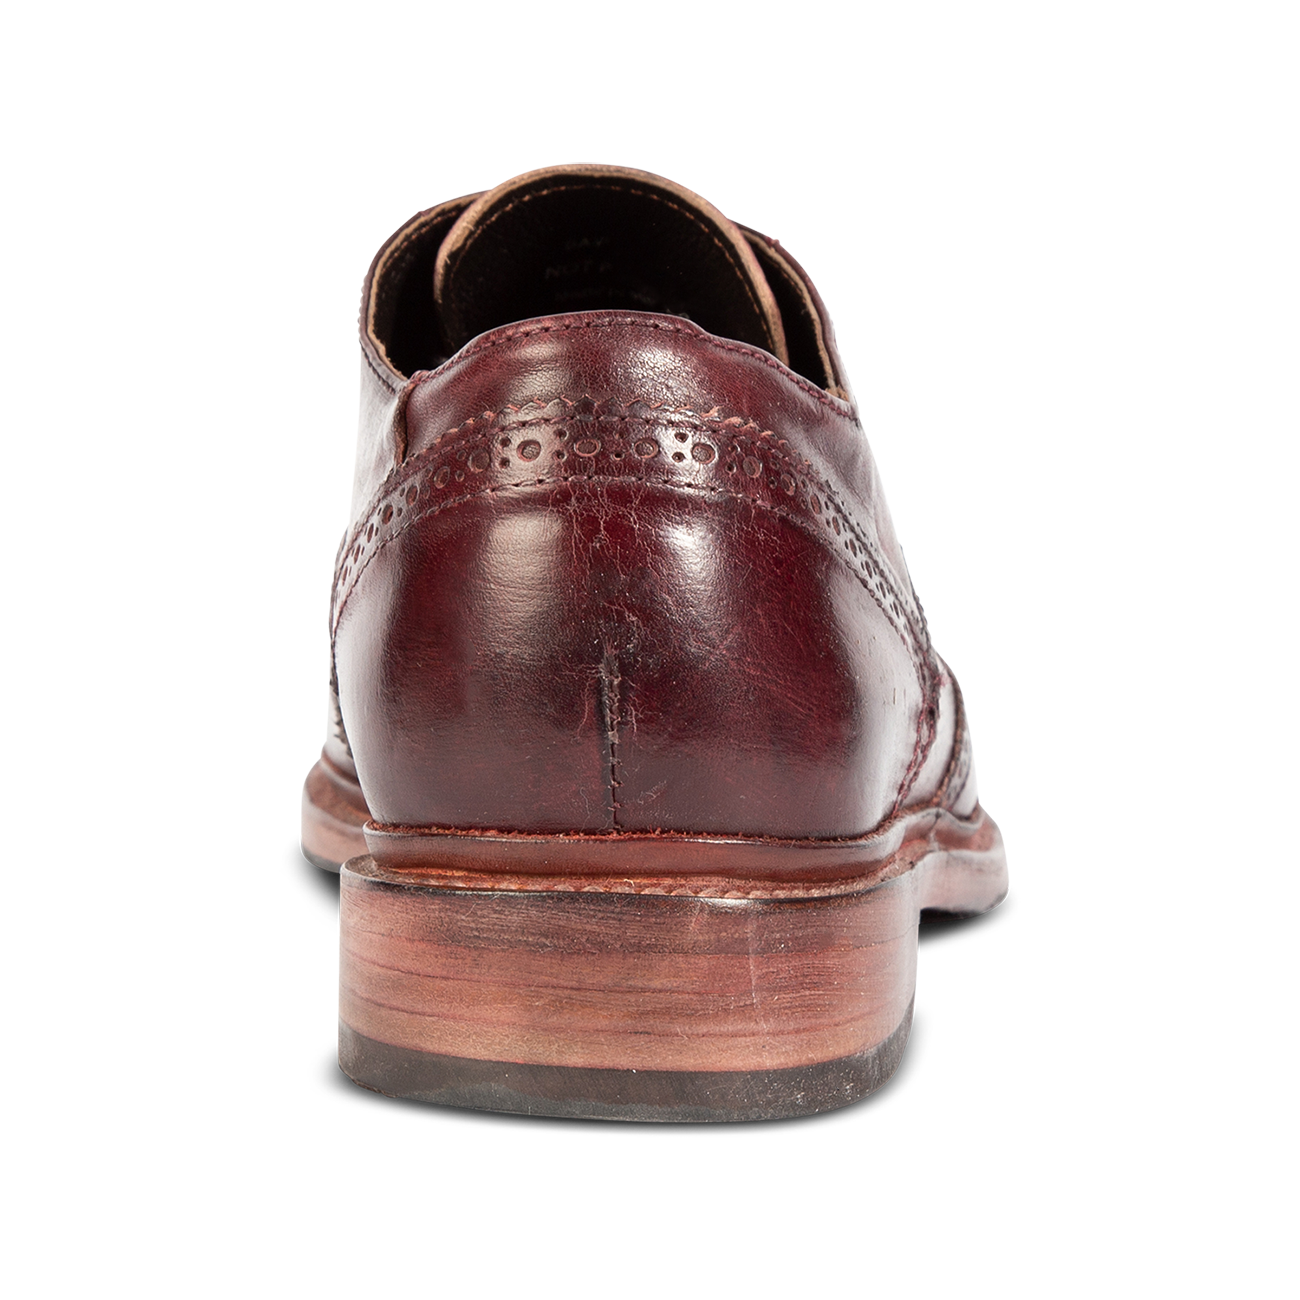 Back view showing low heel on FREEBIRD men's Kensington wine shoe